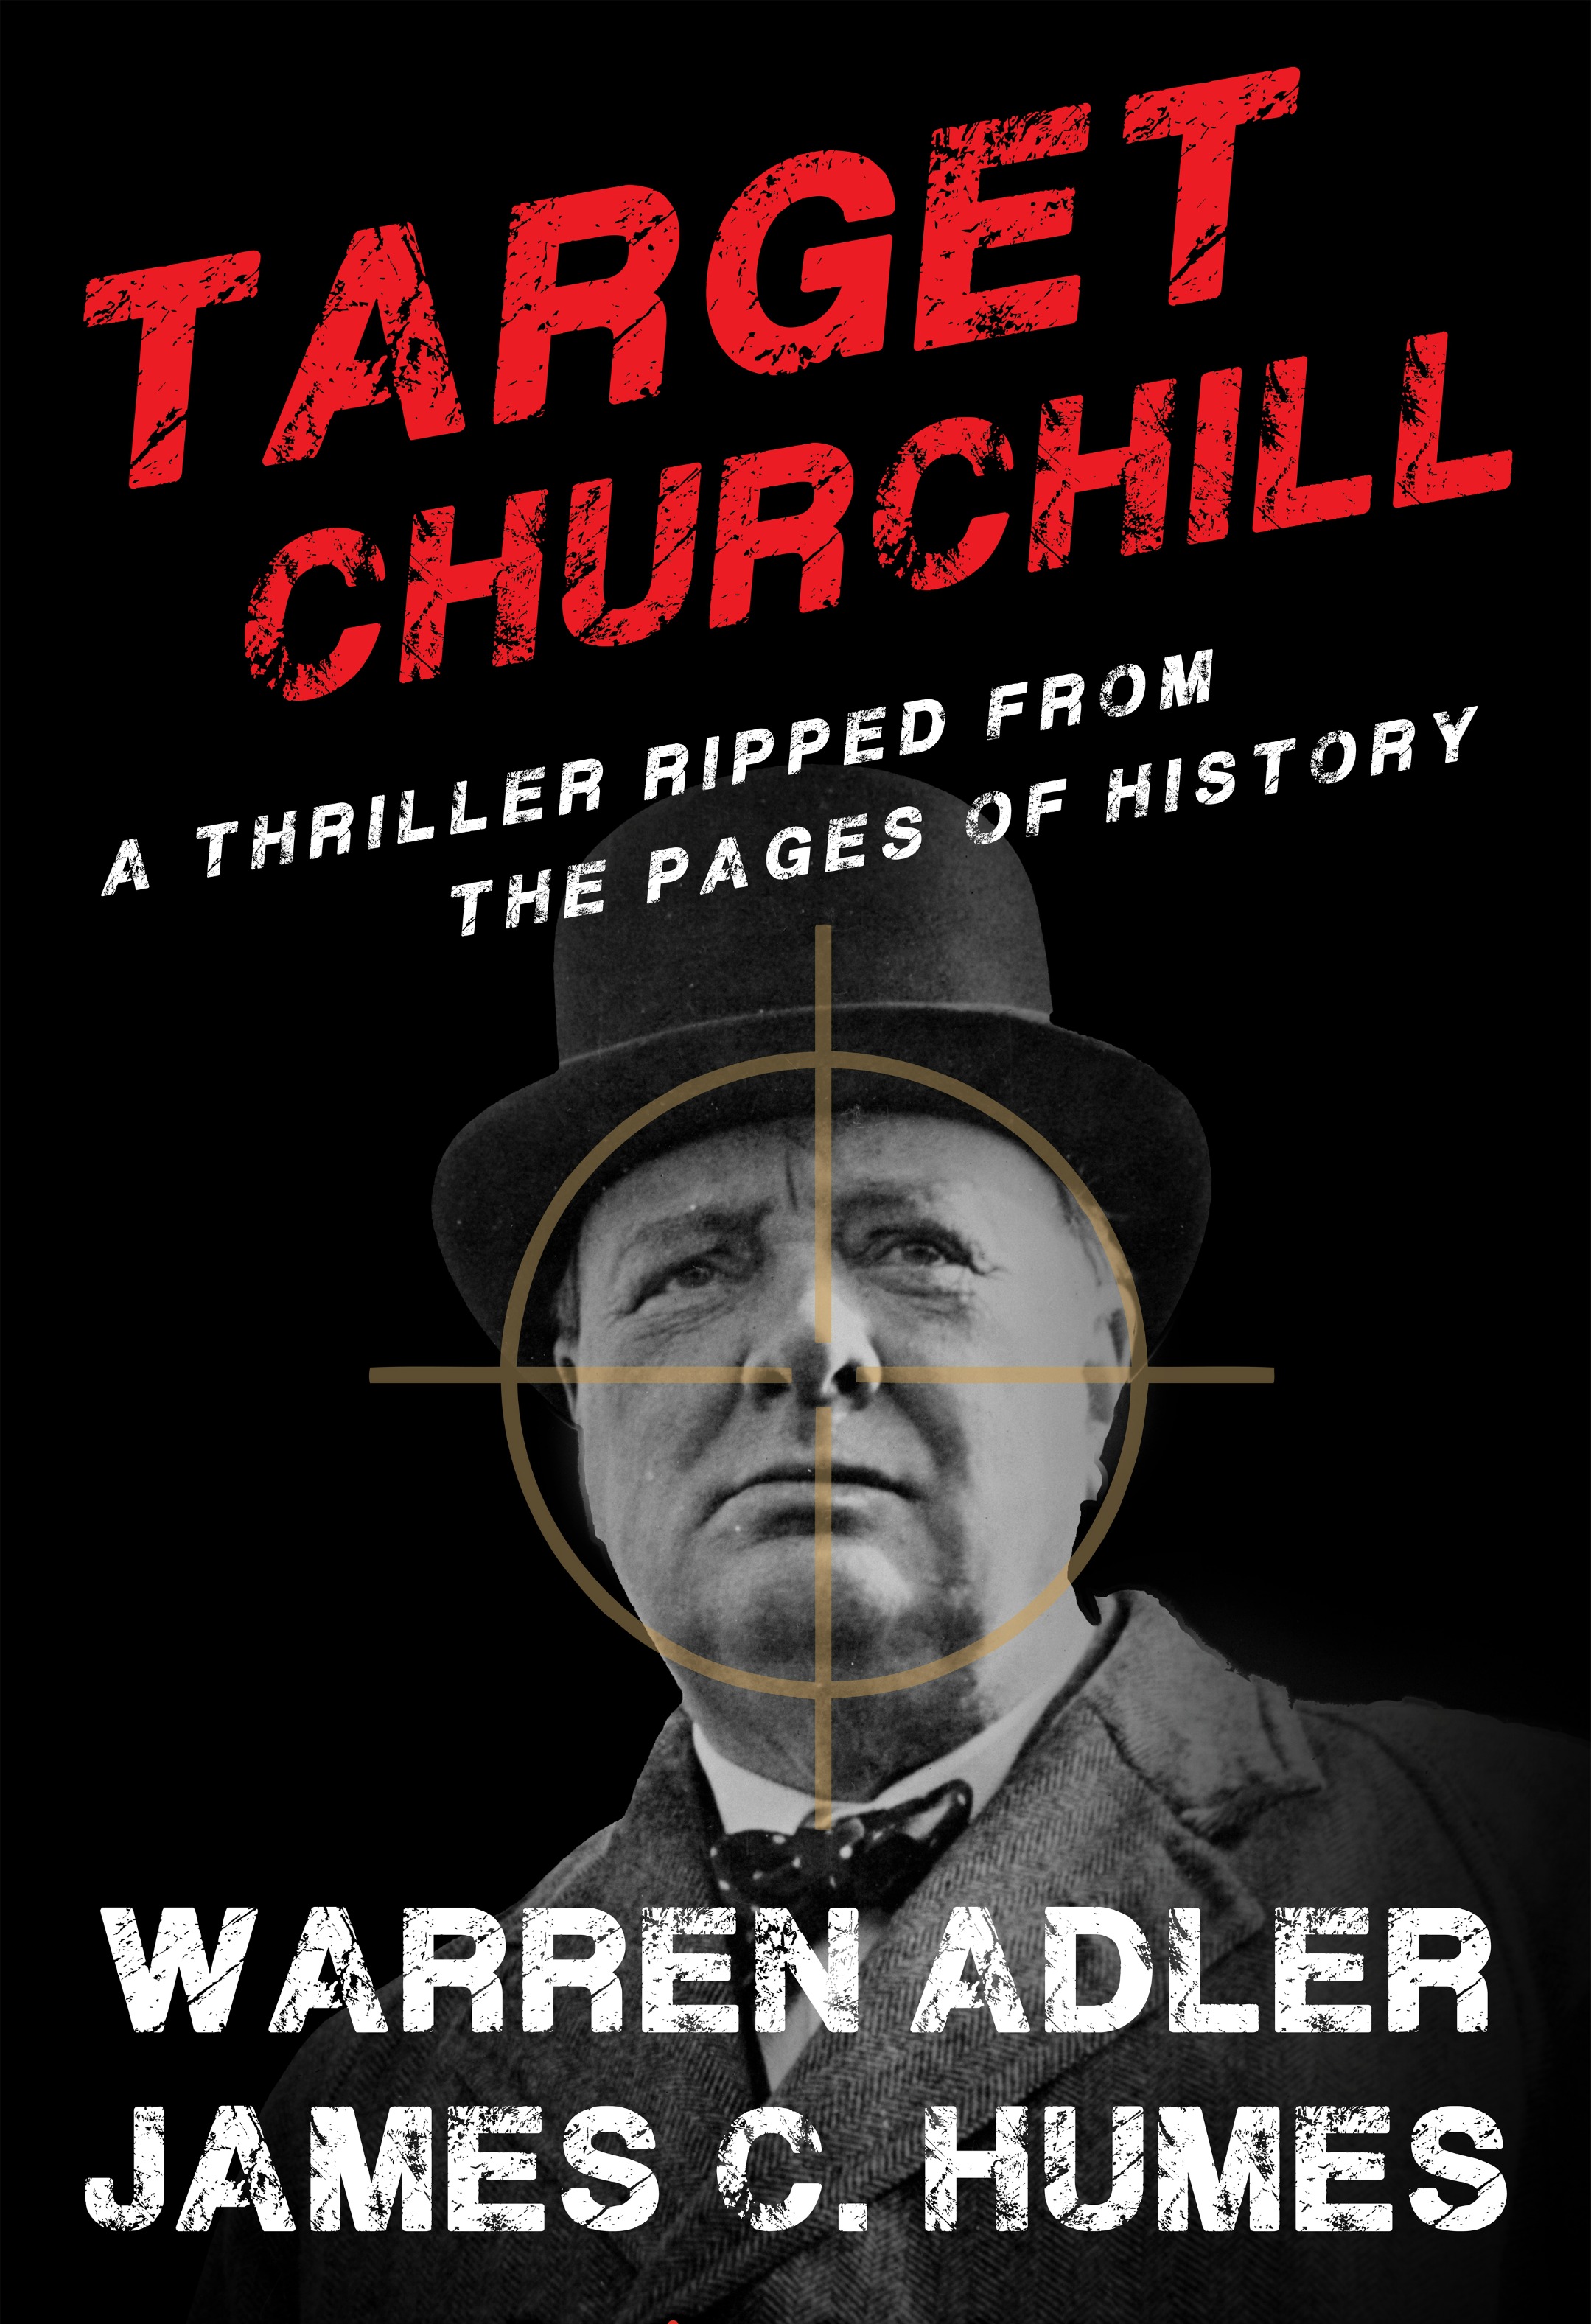 Target Churchill